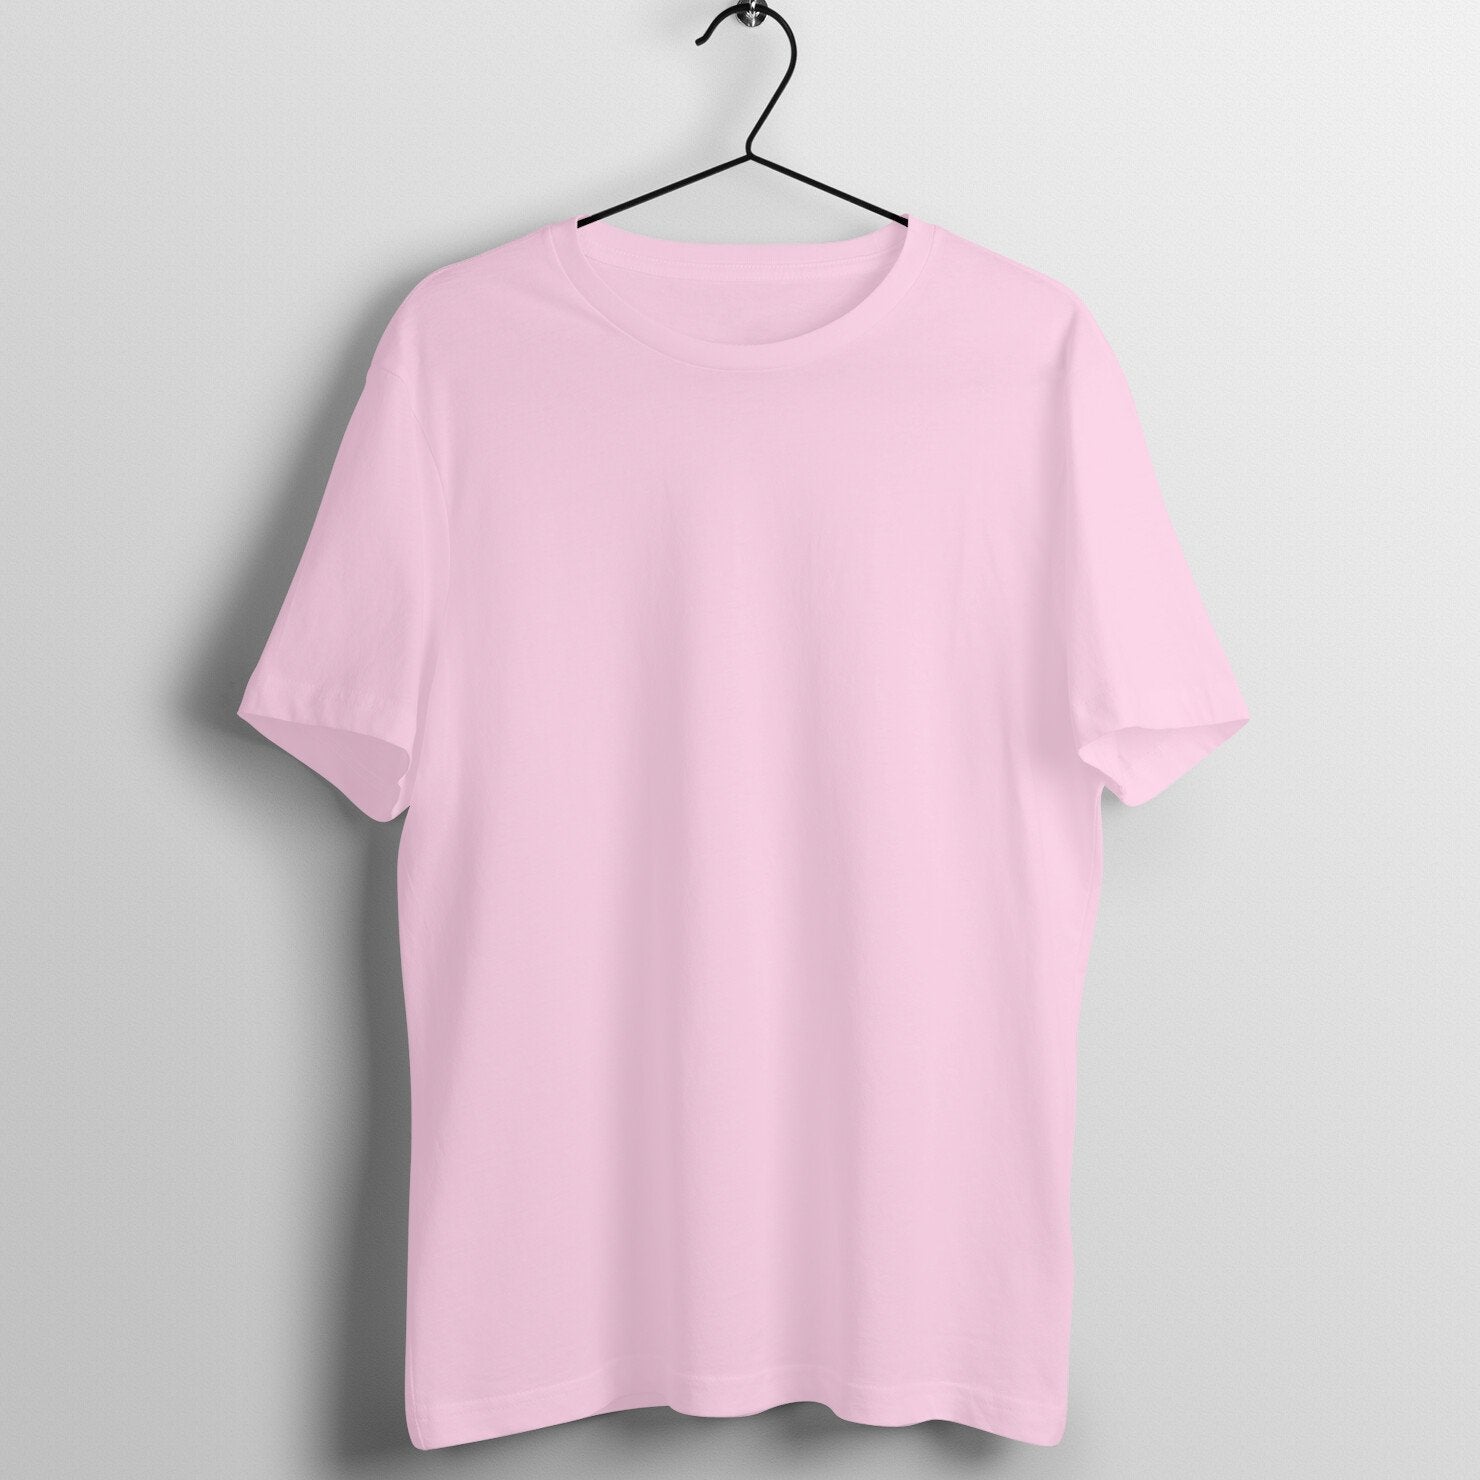 Light Pink Half Sleeve T-Shirt - Insane Tees